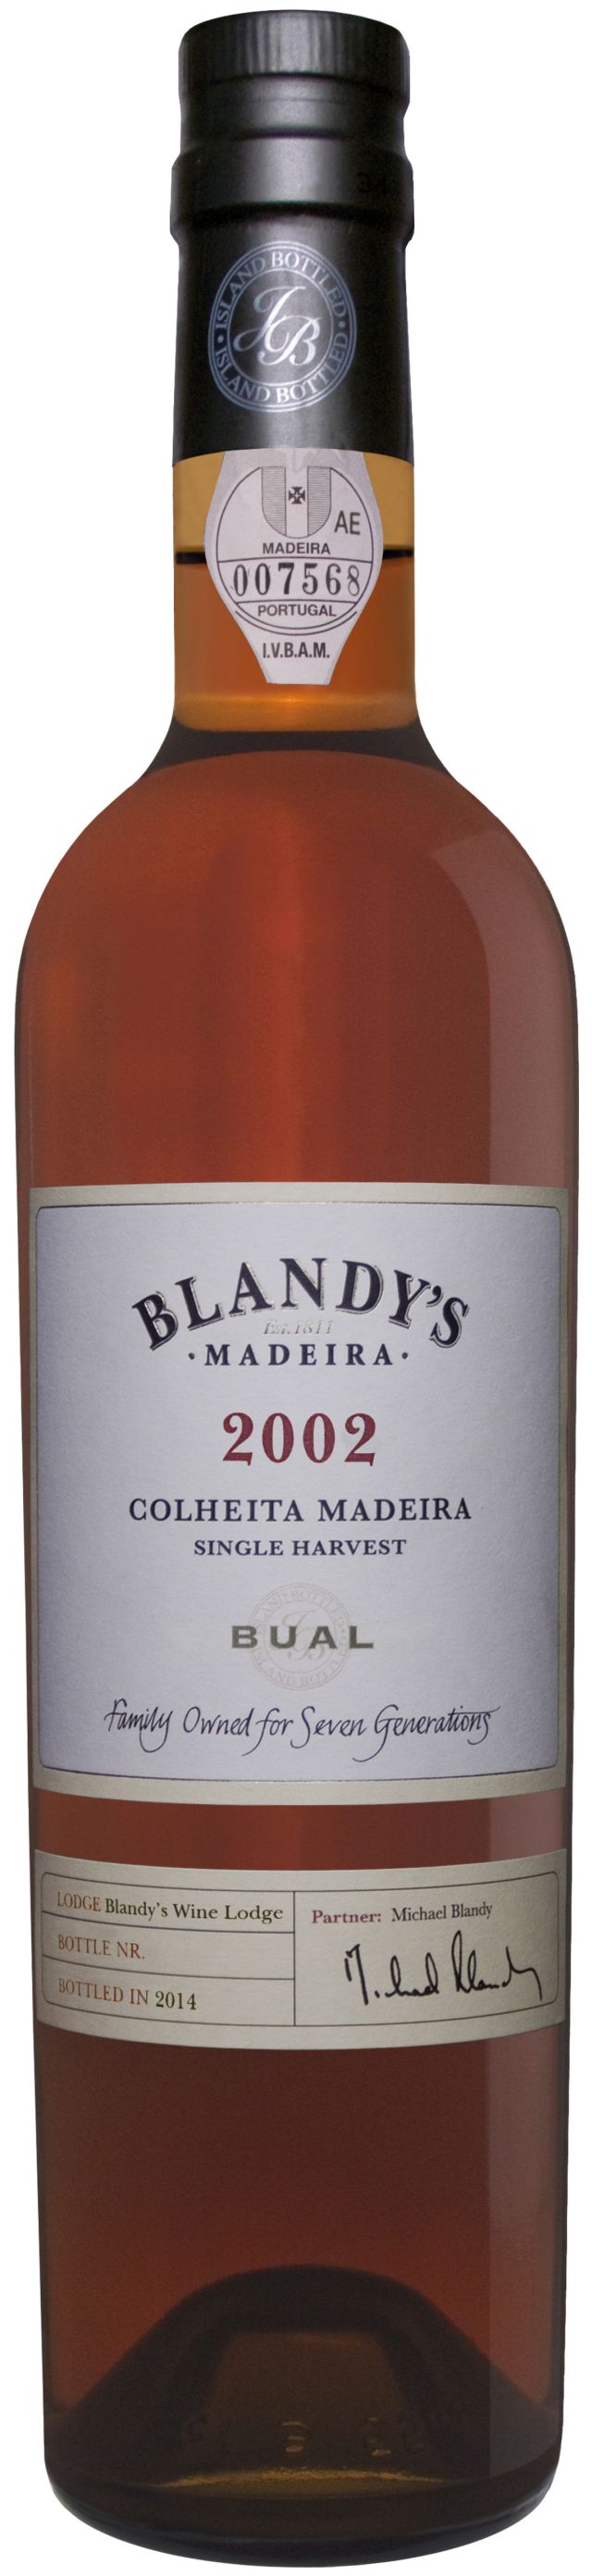 Blandy's_Colheita_Bual 2002_HD